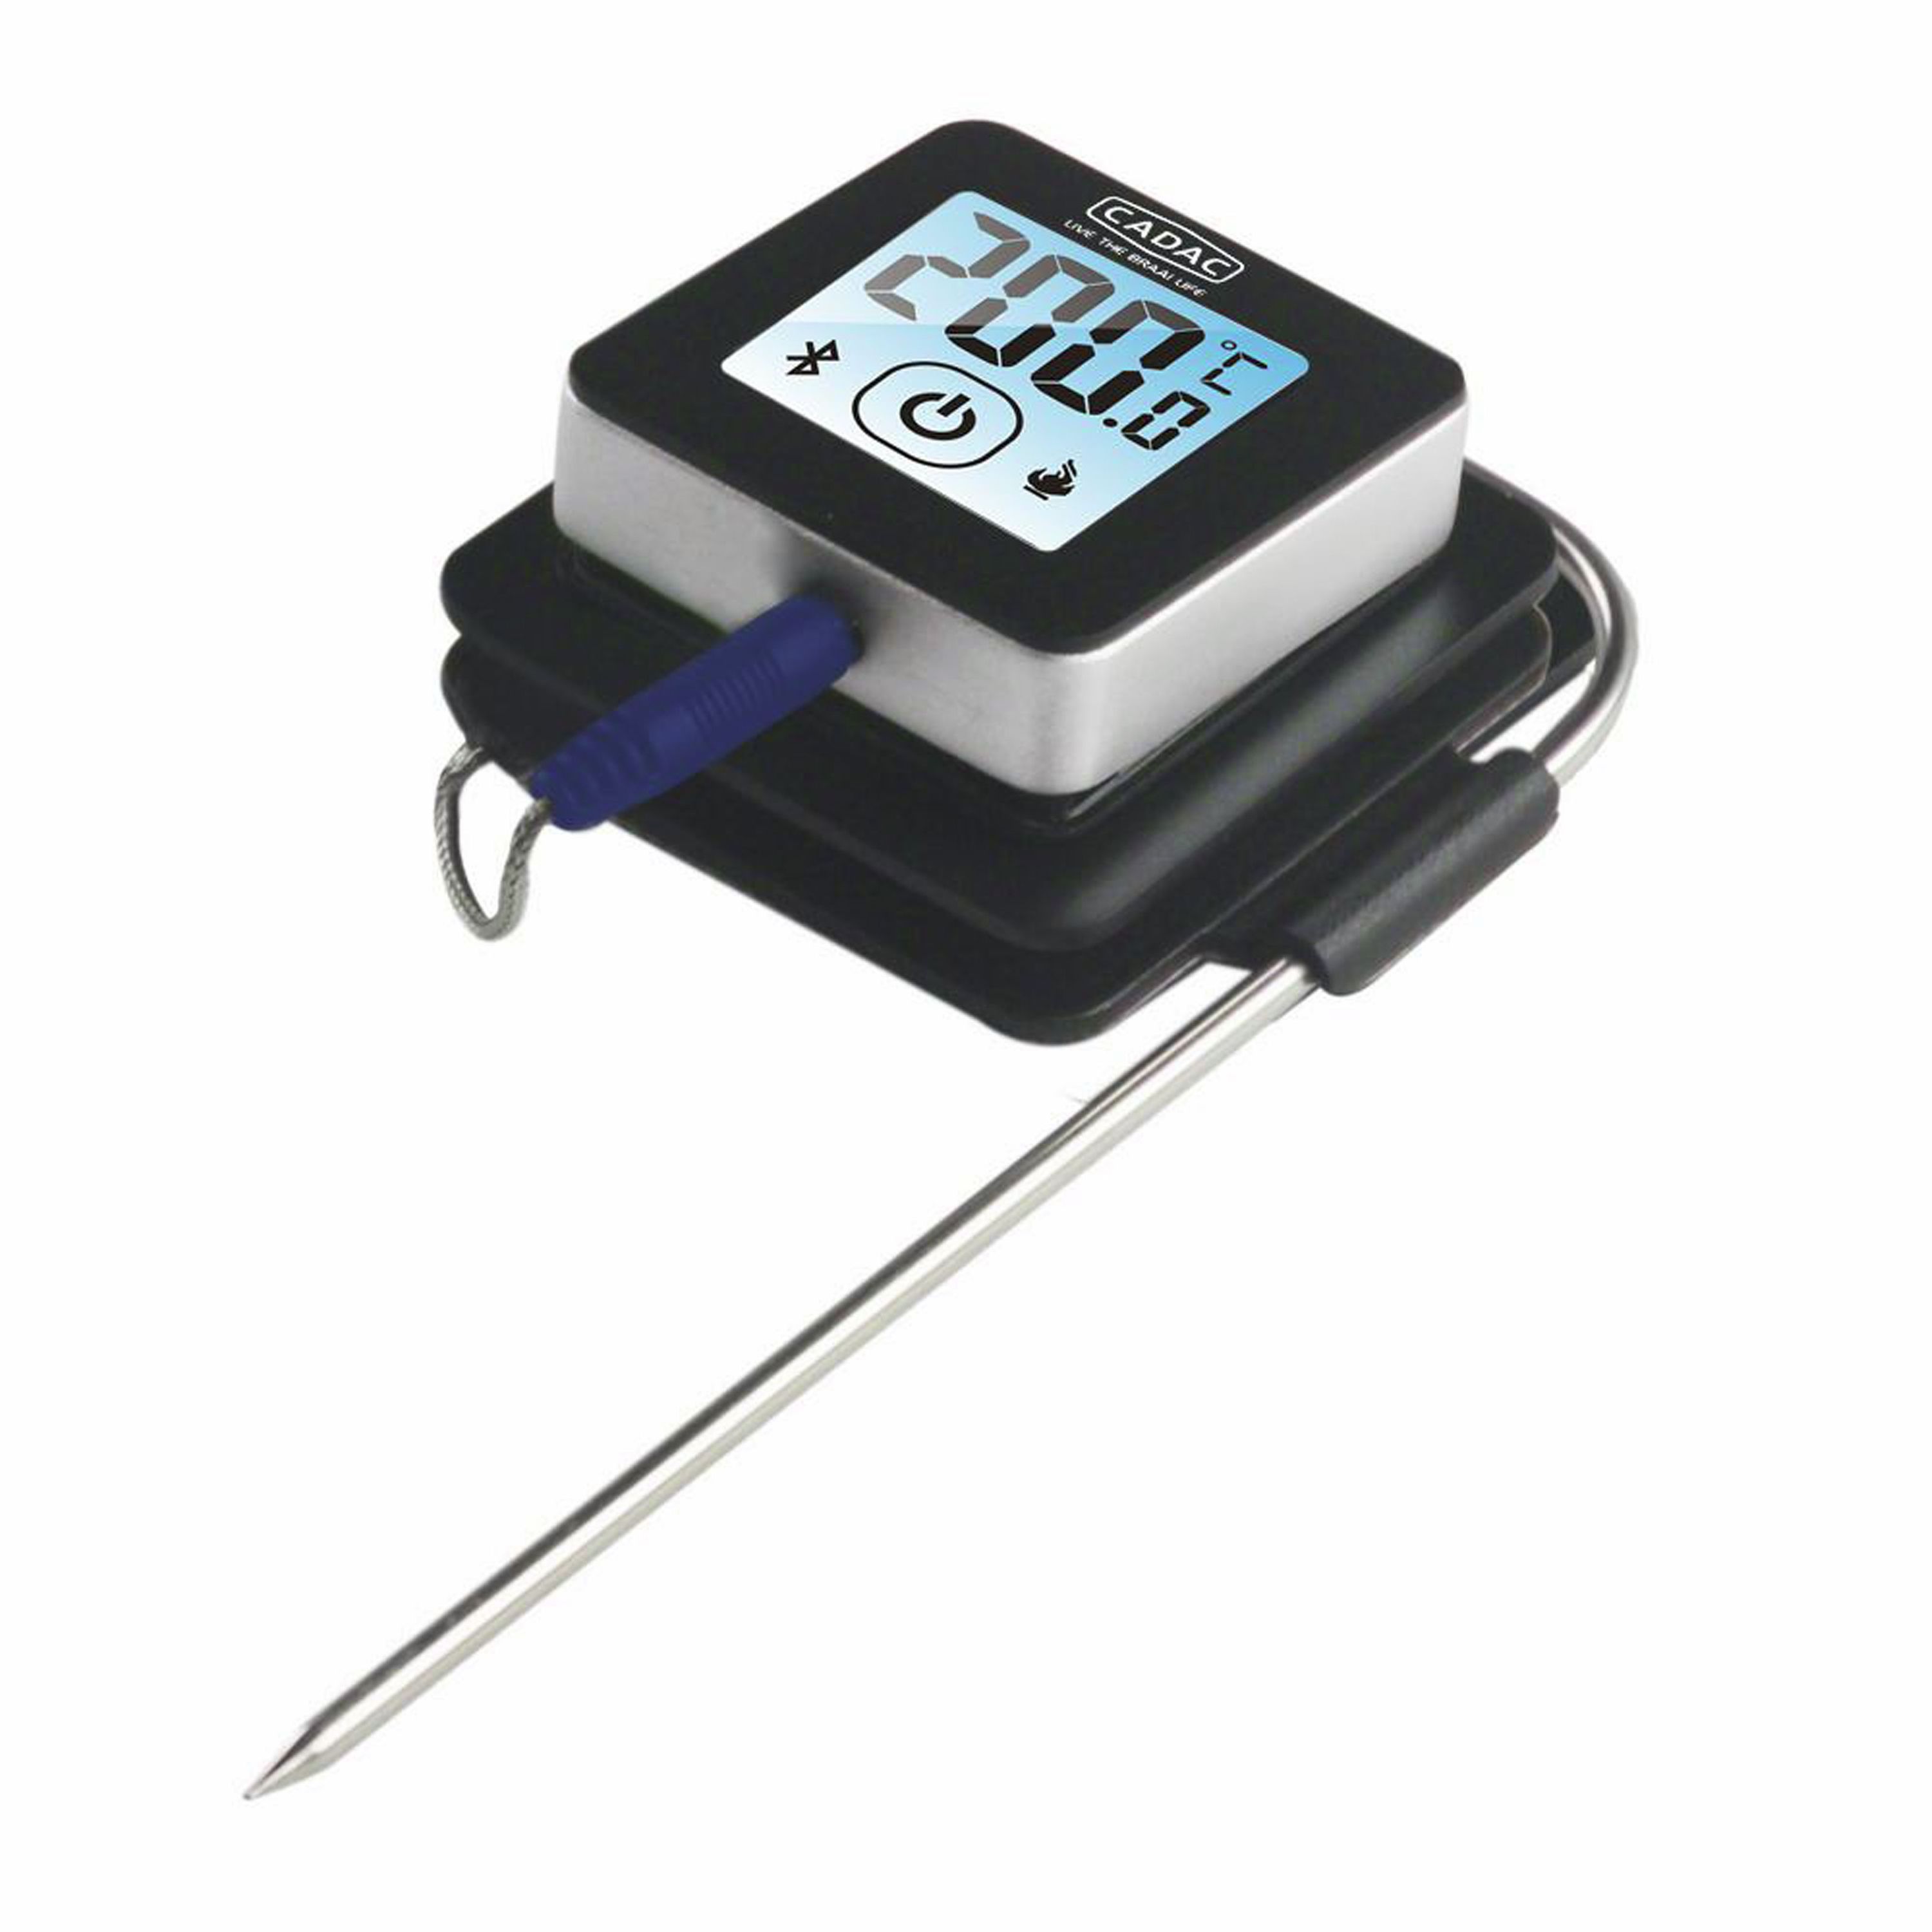 Bluetooth Thermometer CADAC digital